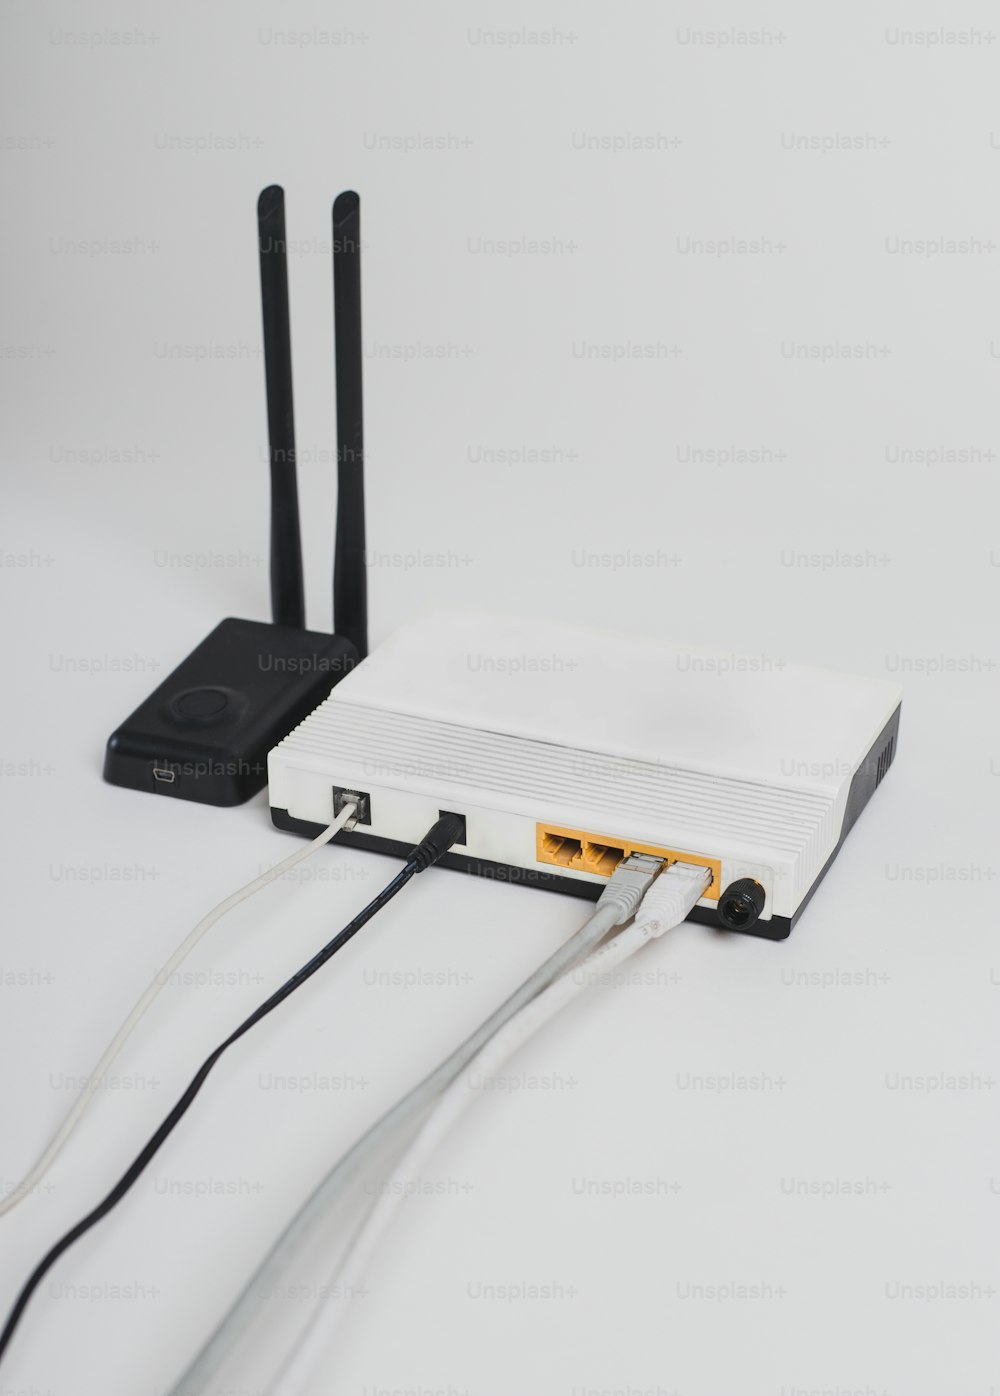 Un enrutador conectado a un enrutador sobre una superficie blanca